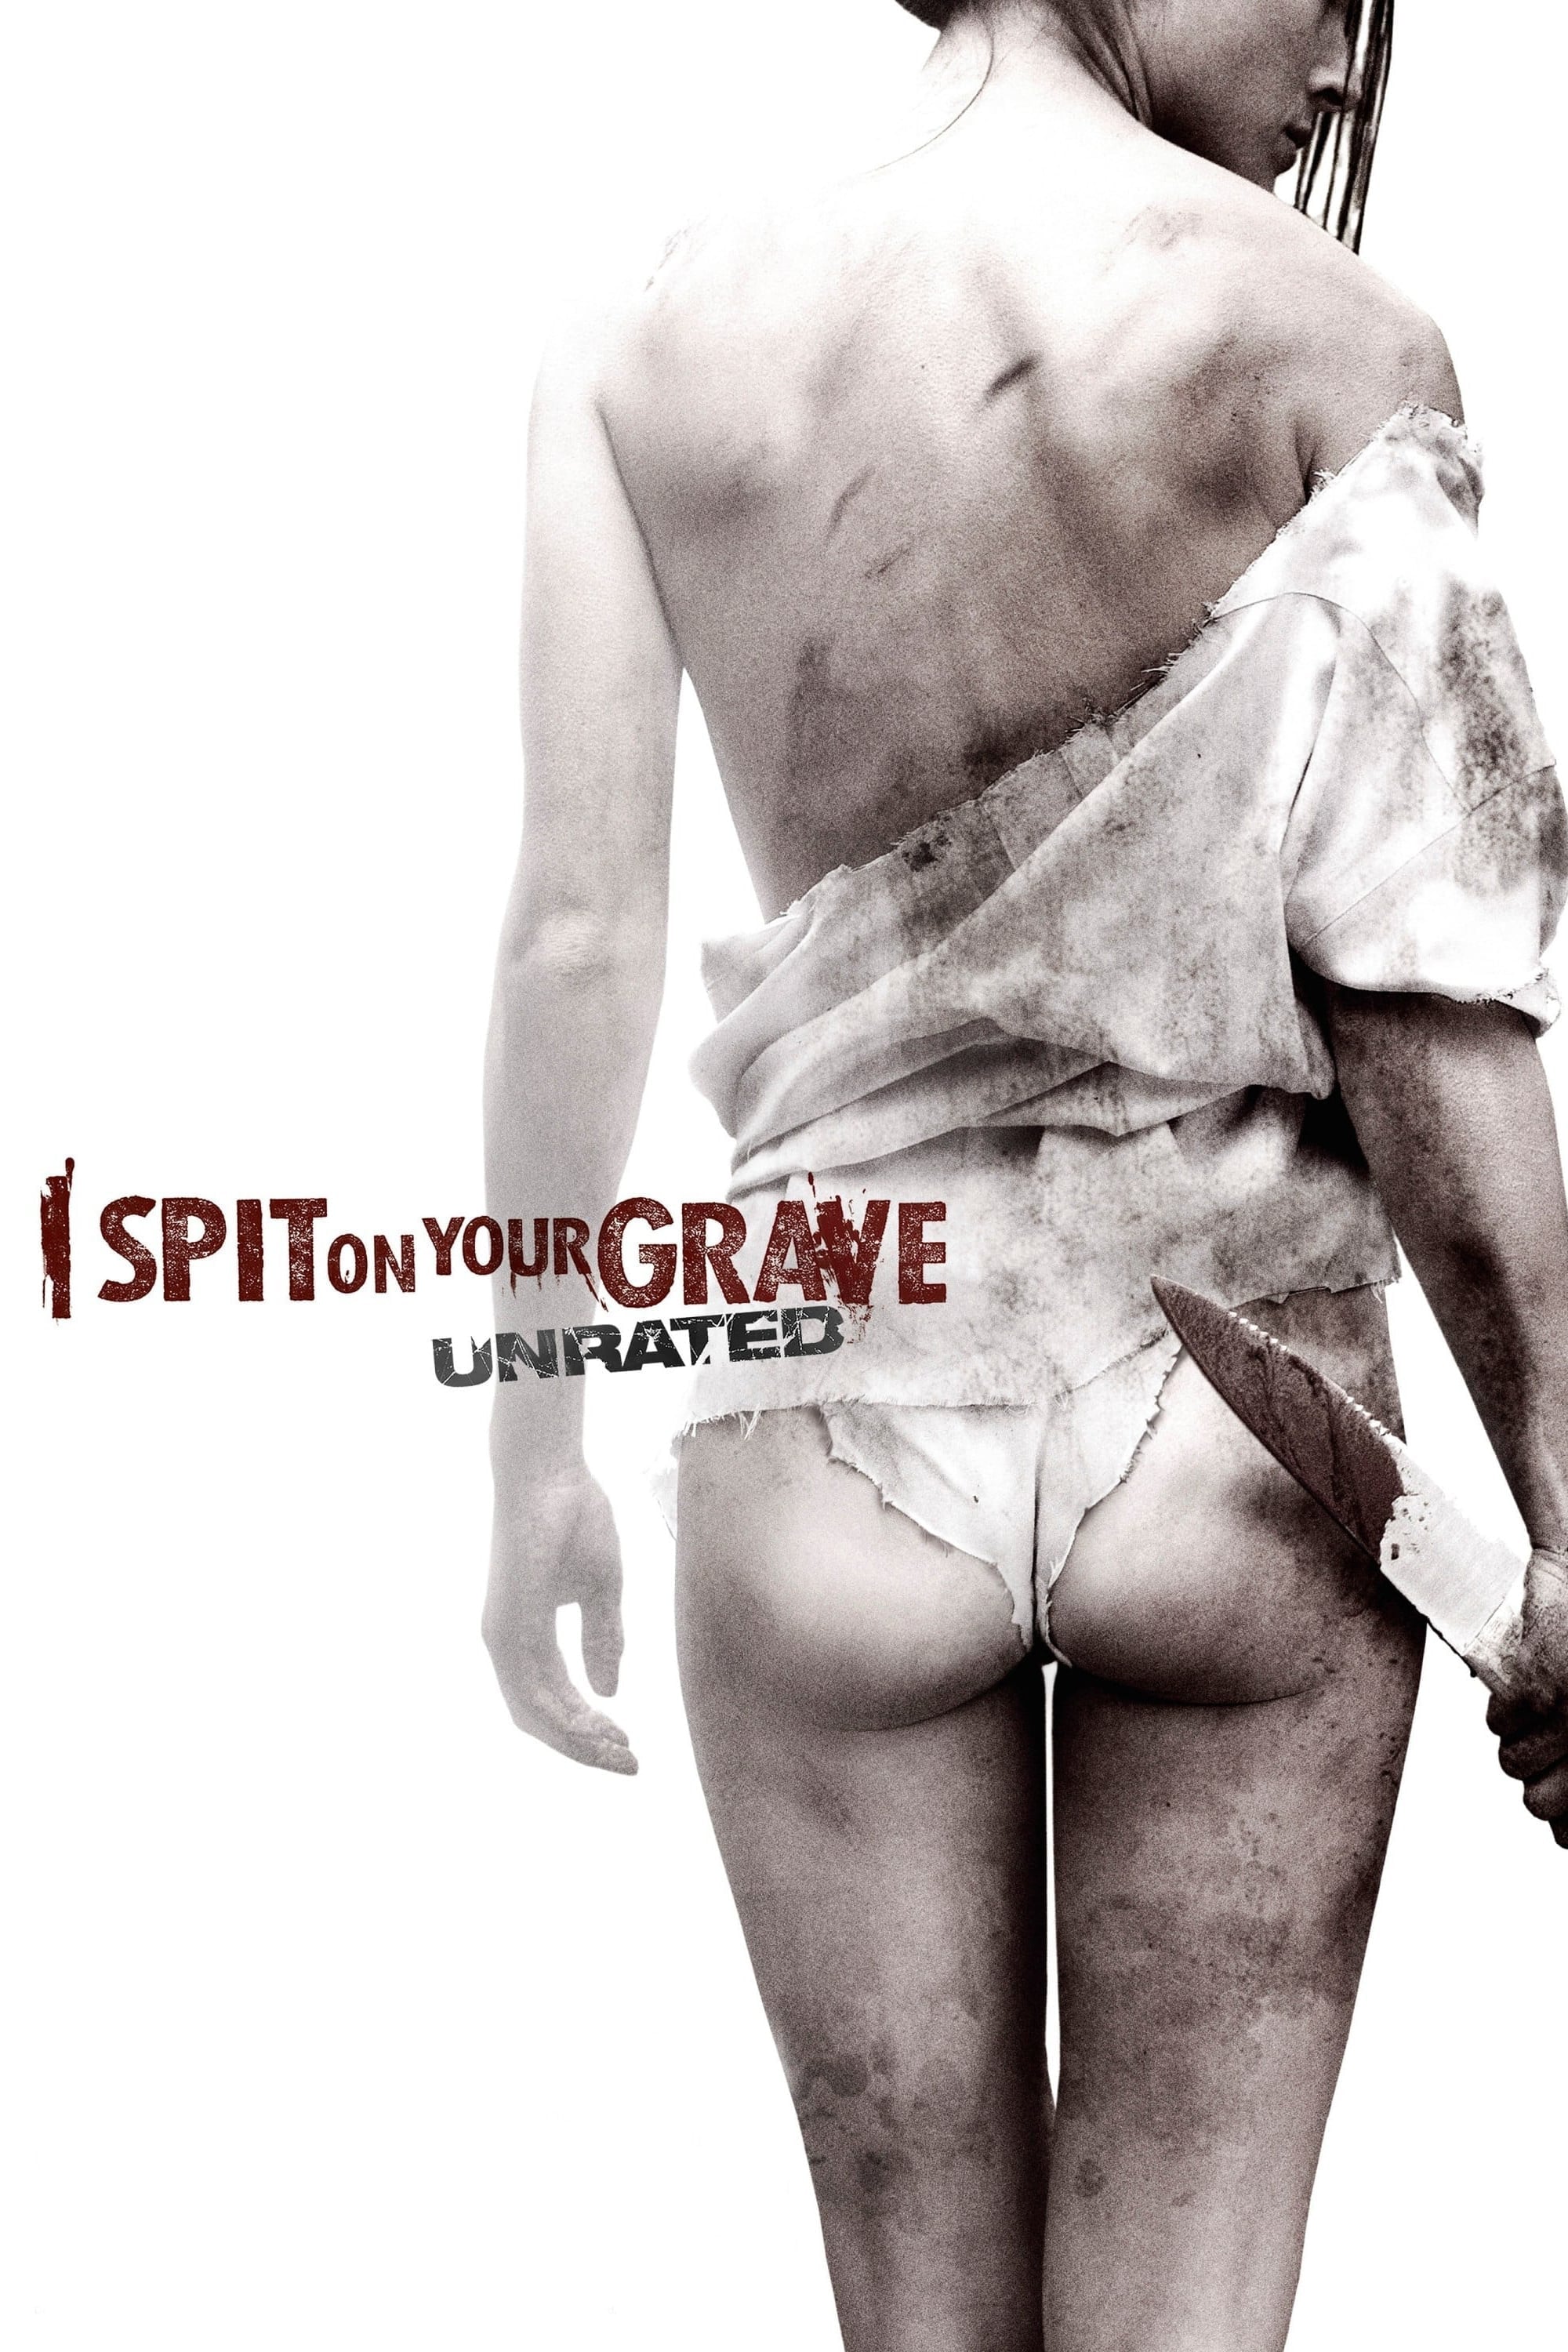 Plakat von "I Spit on Your Grave"